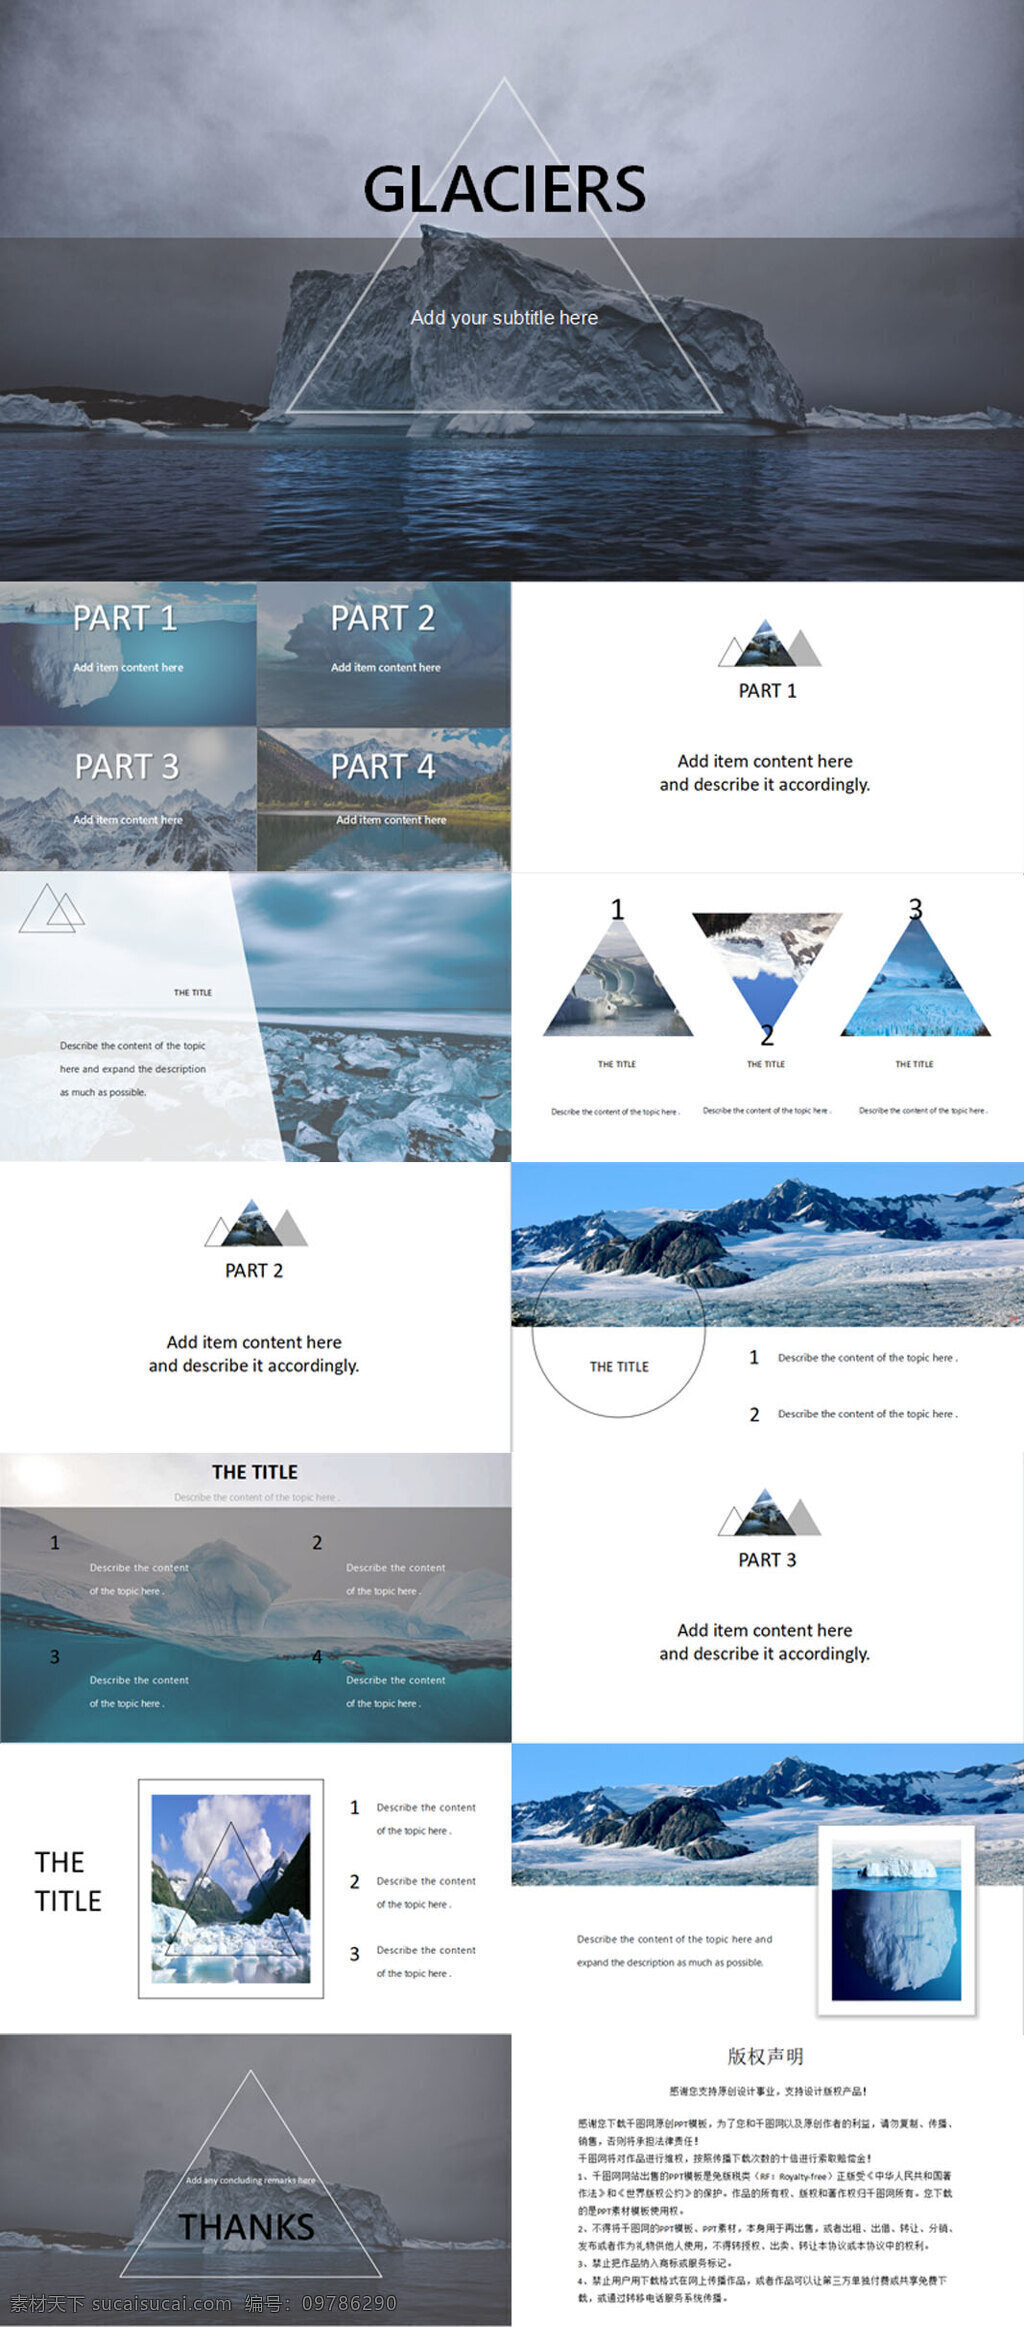 glaciers 主题 简约 模板 企业宣传 校园招聘 产品介绍 旅游宣传 品牌宣传 简约模板